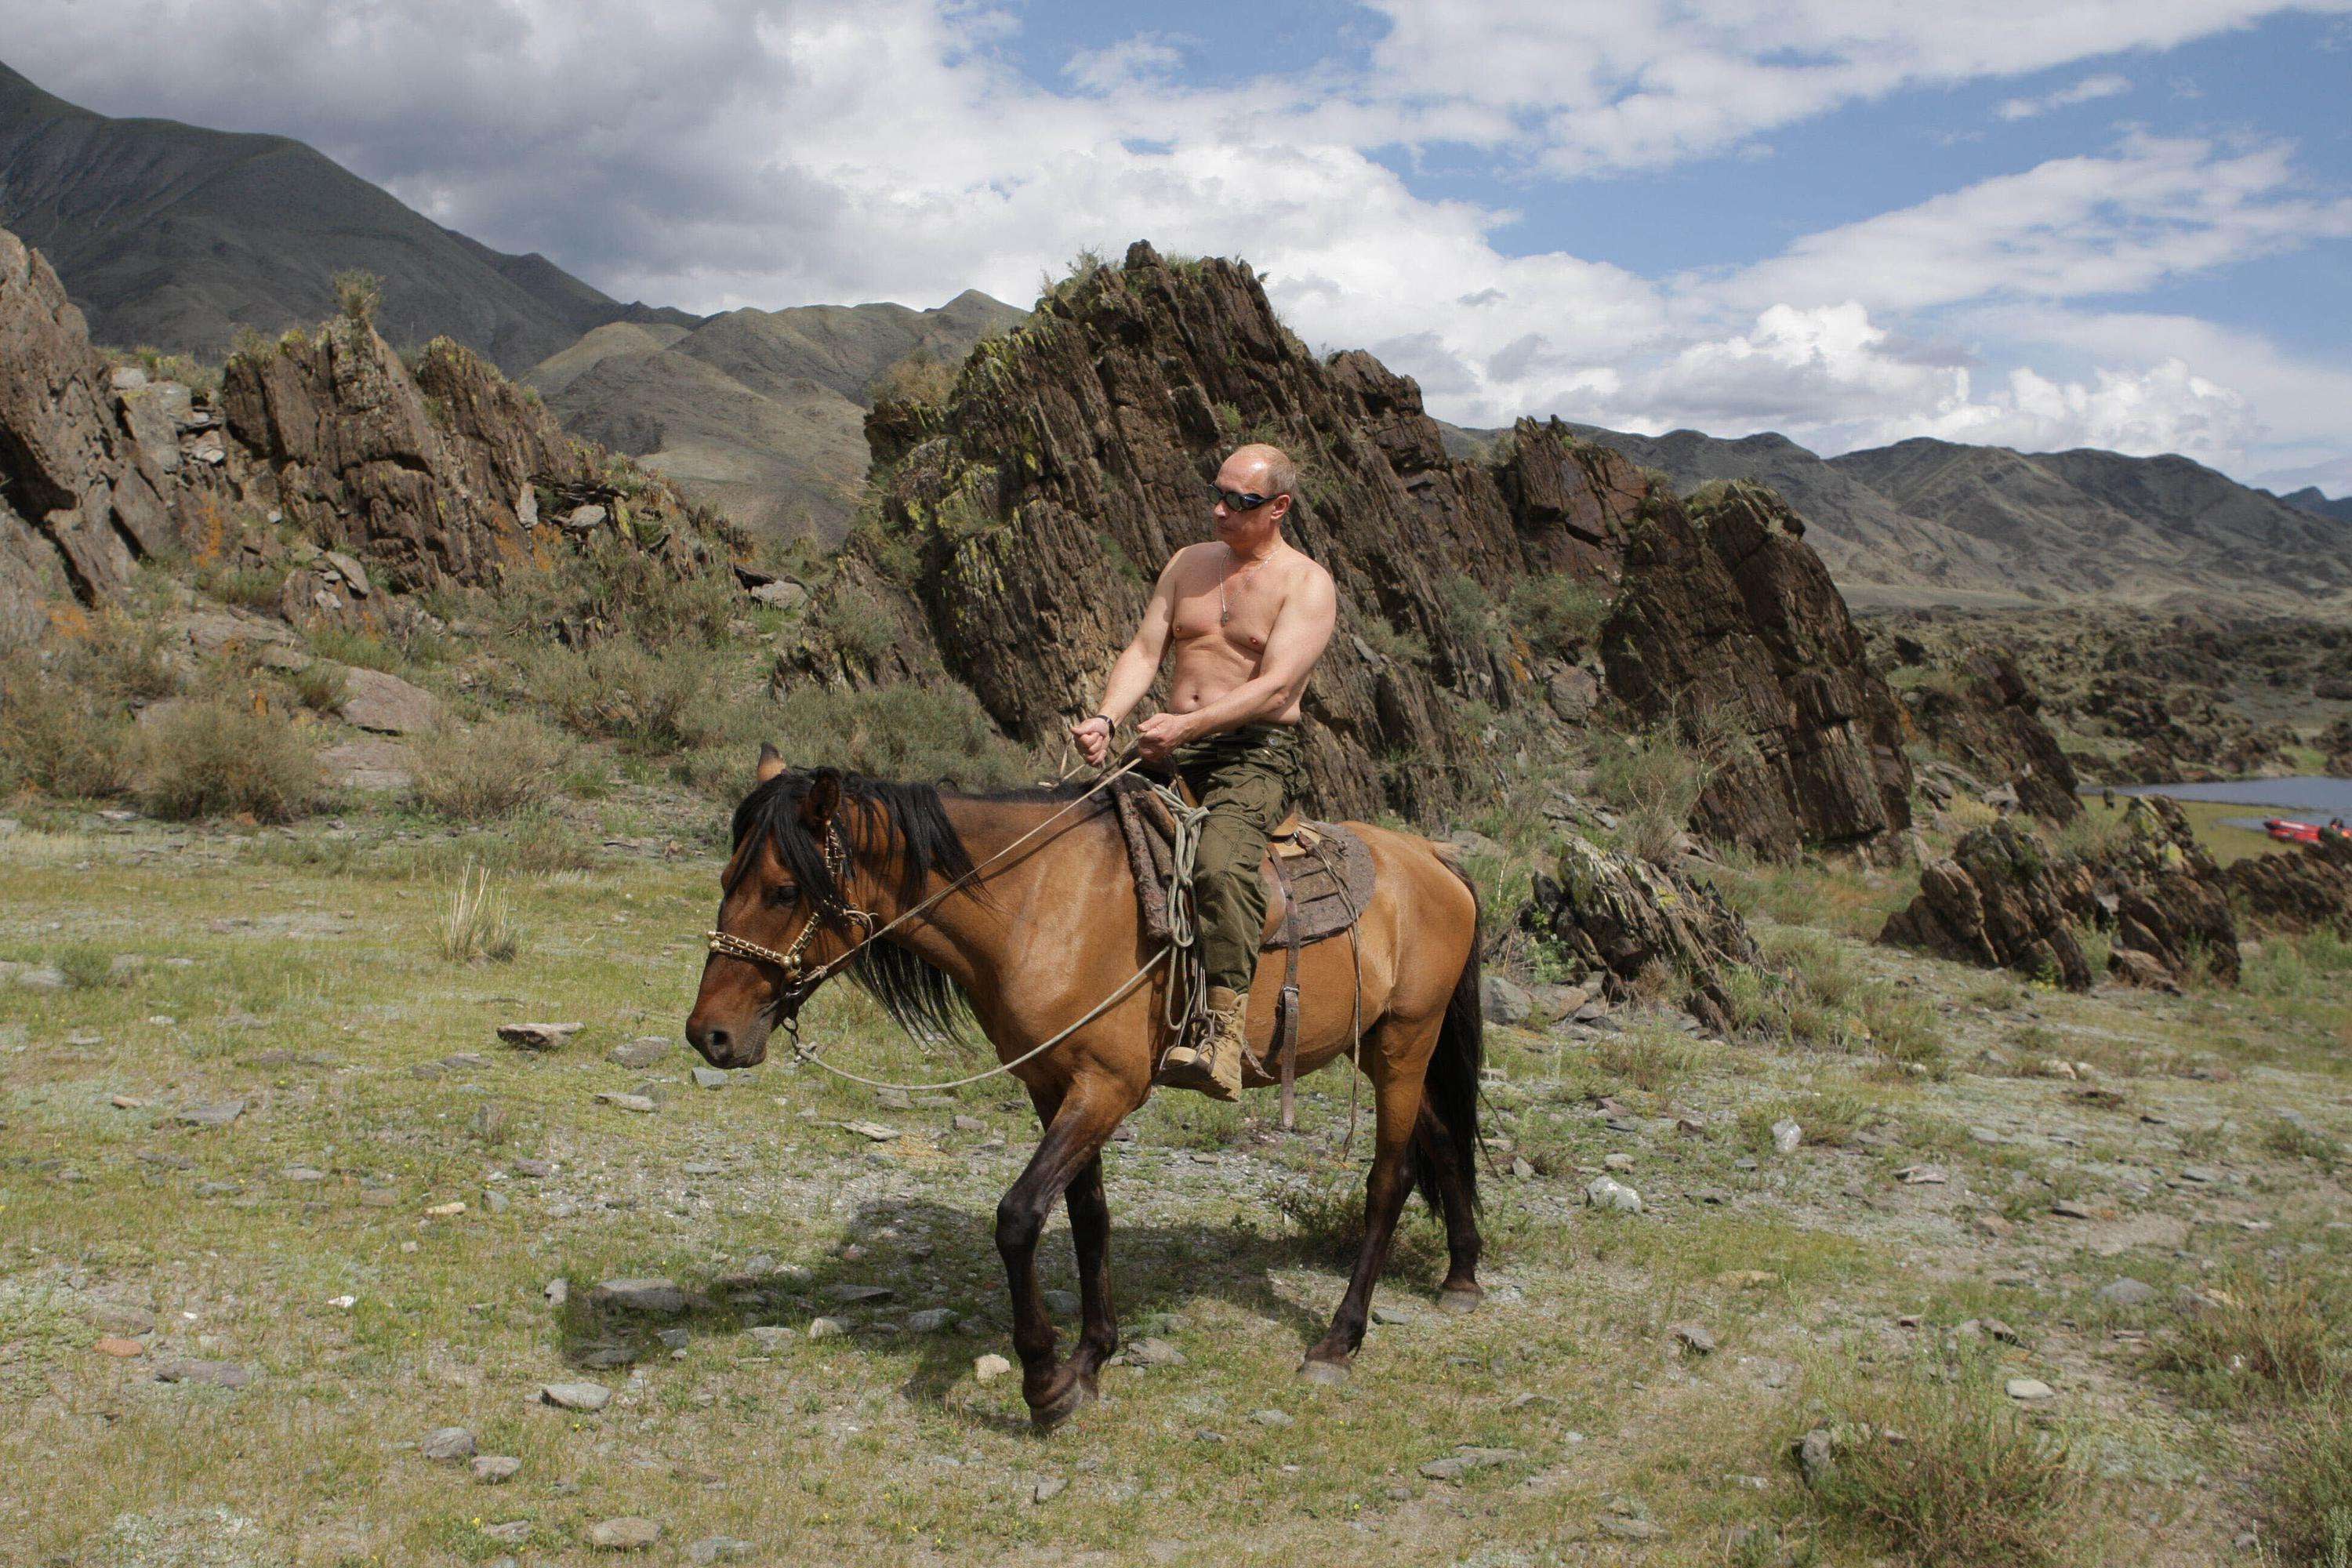 image for Putin: Western leaders would look ‘disgusting’ topless